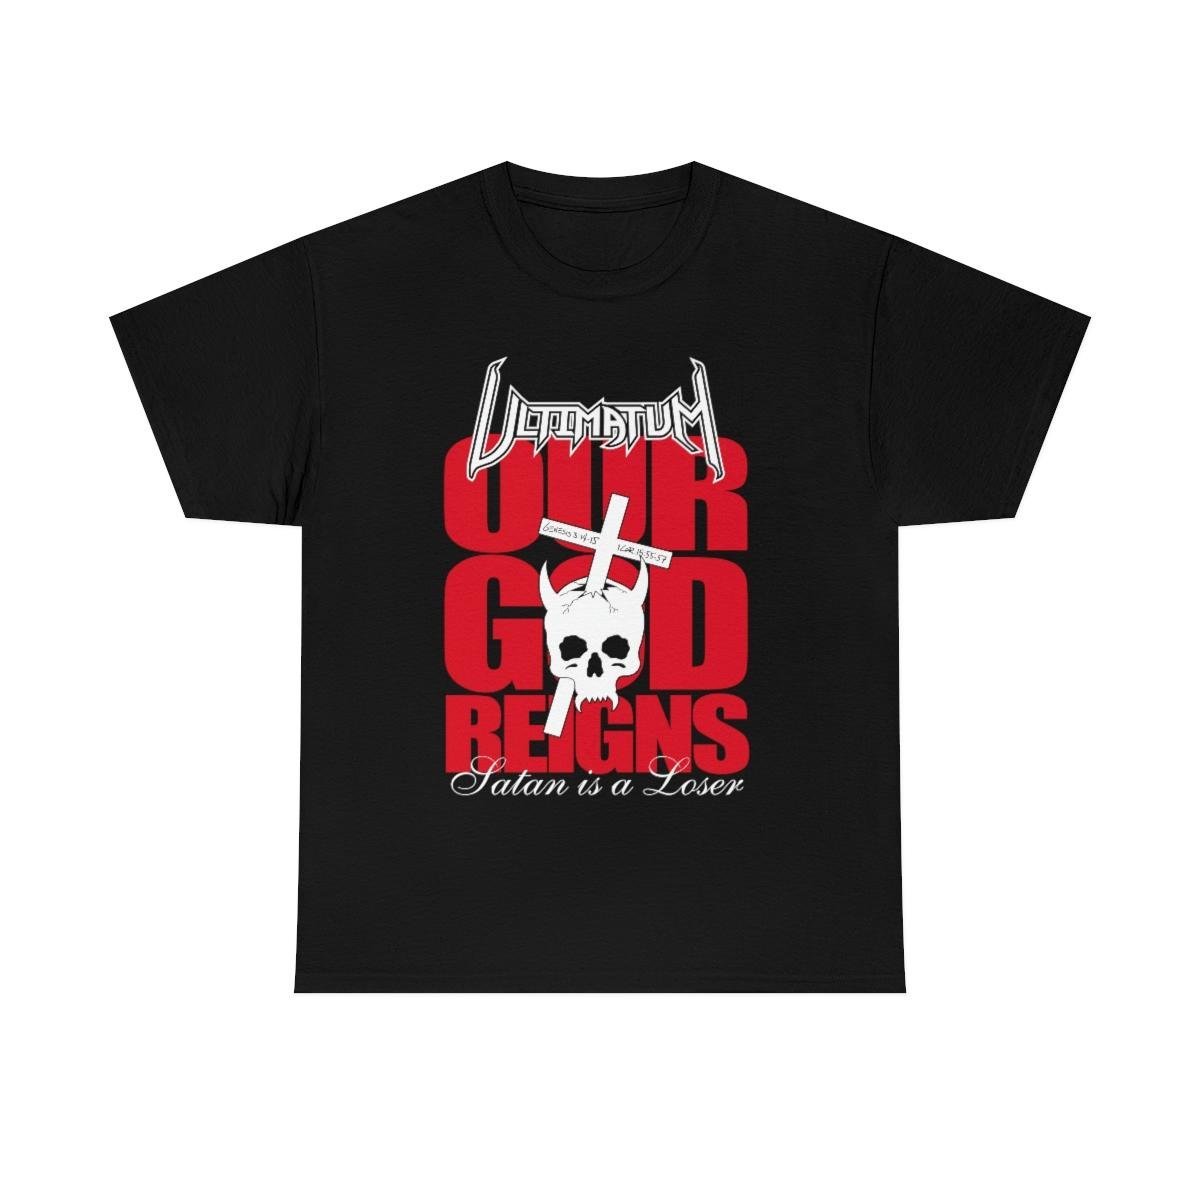 Ultimatum Our God Reigns Short Sleeve Tshirt (5000D)